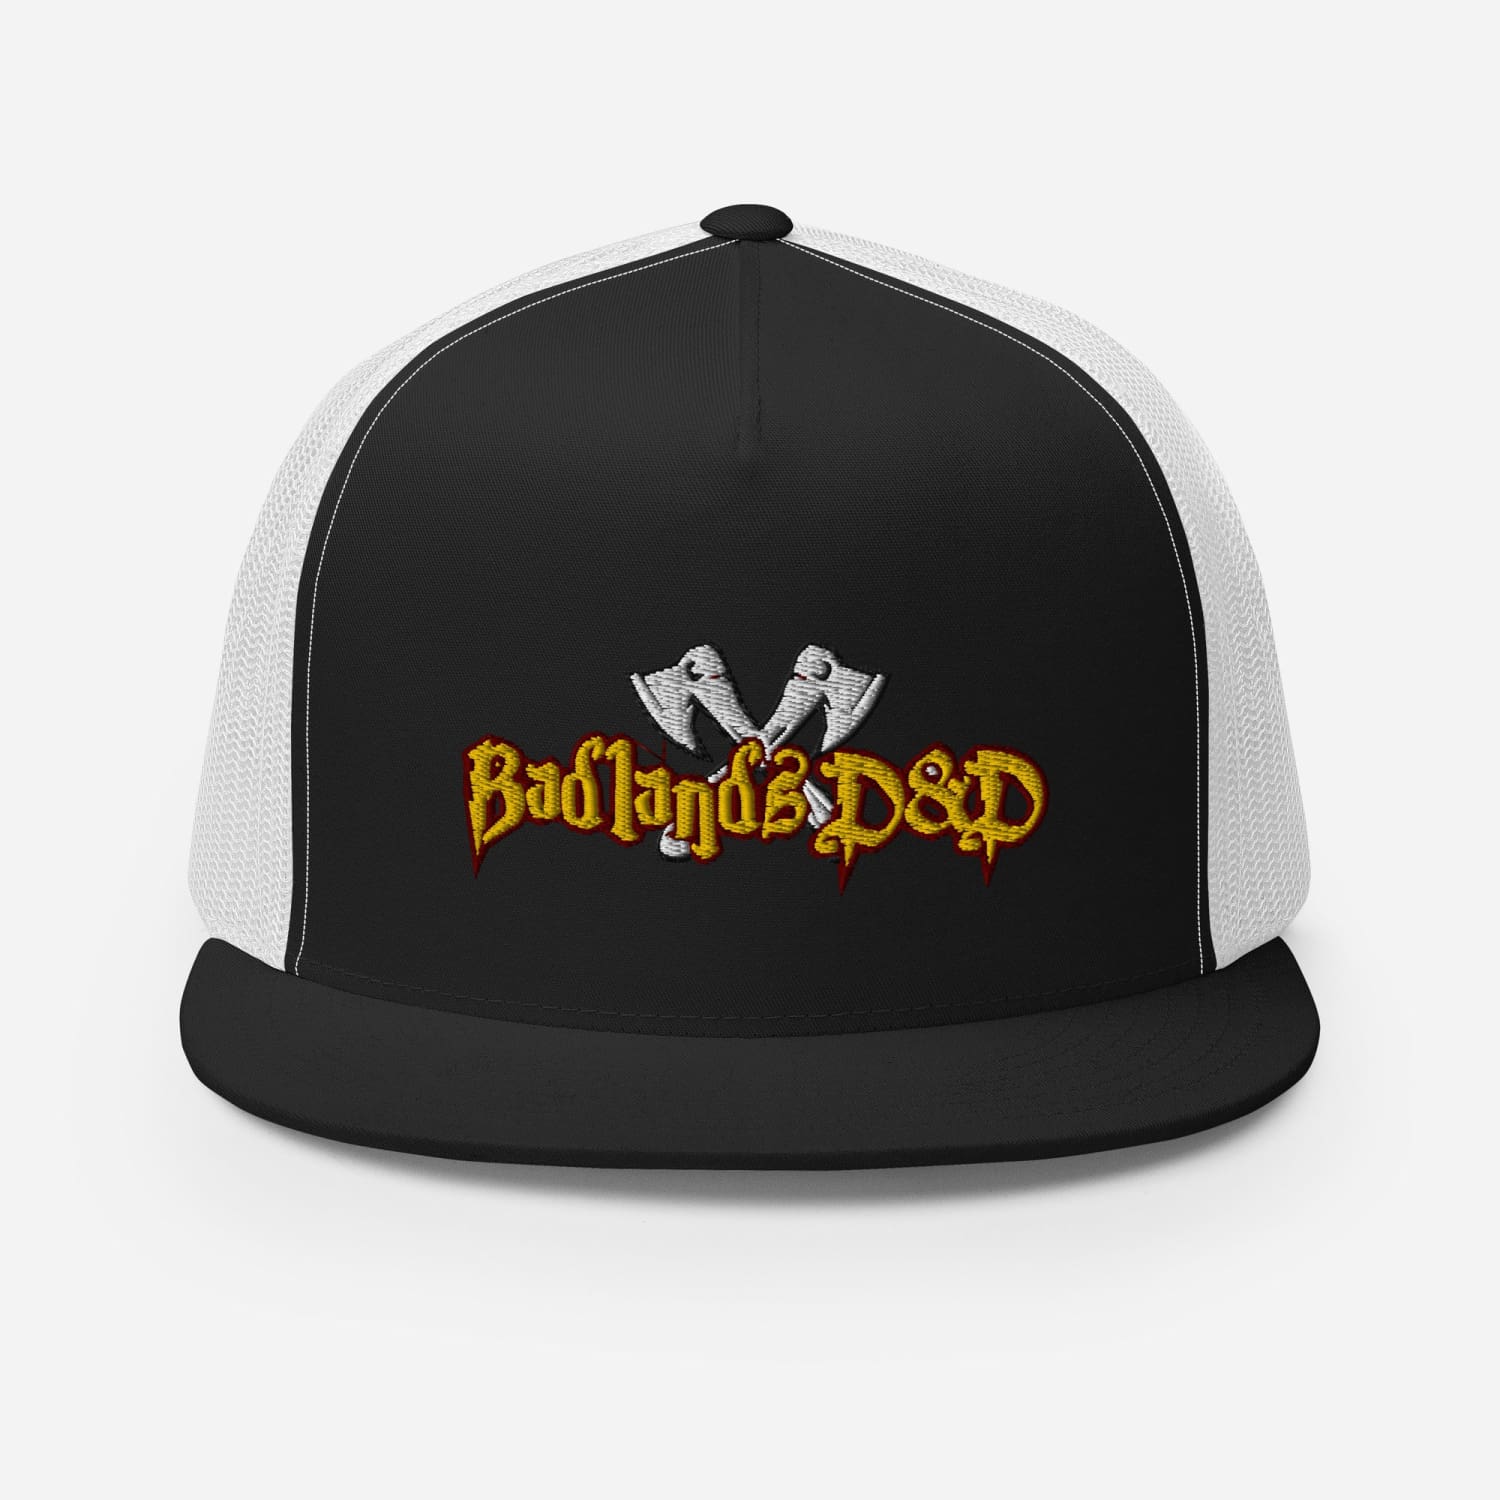 Badlands D&D Logo Classic Trucker Cap - Black/ White